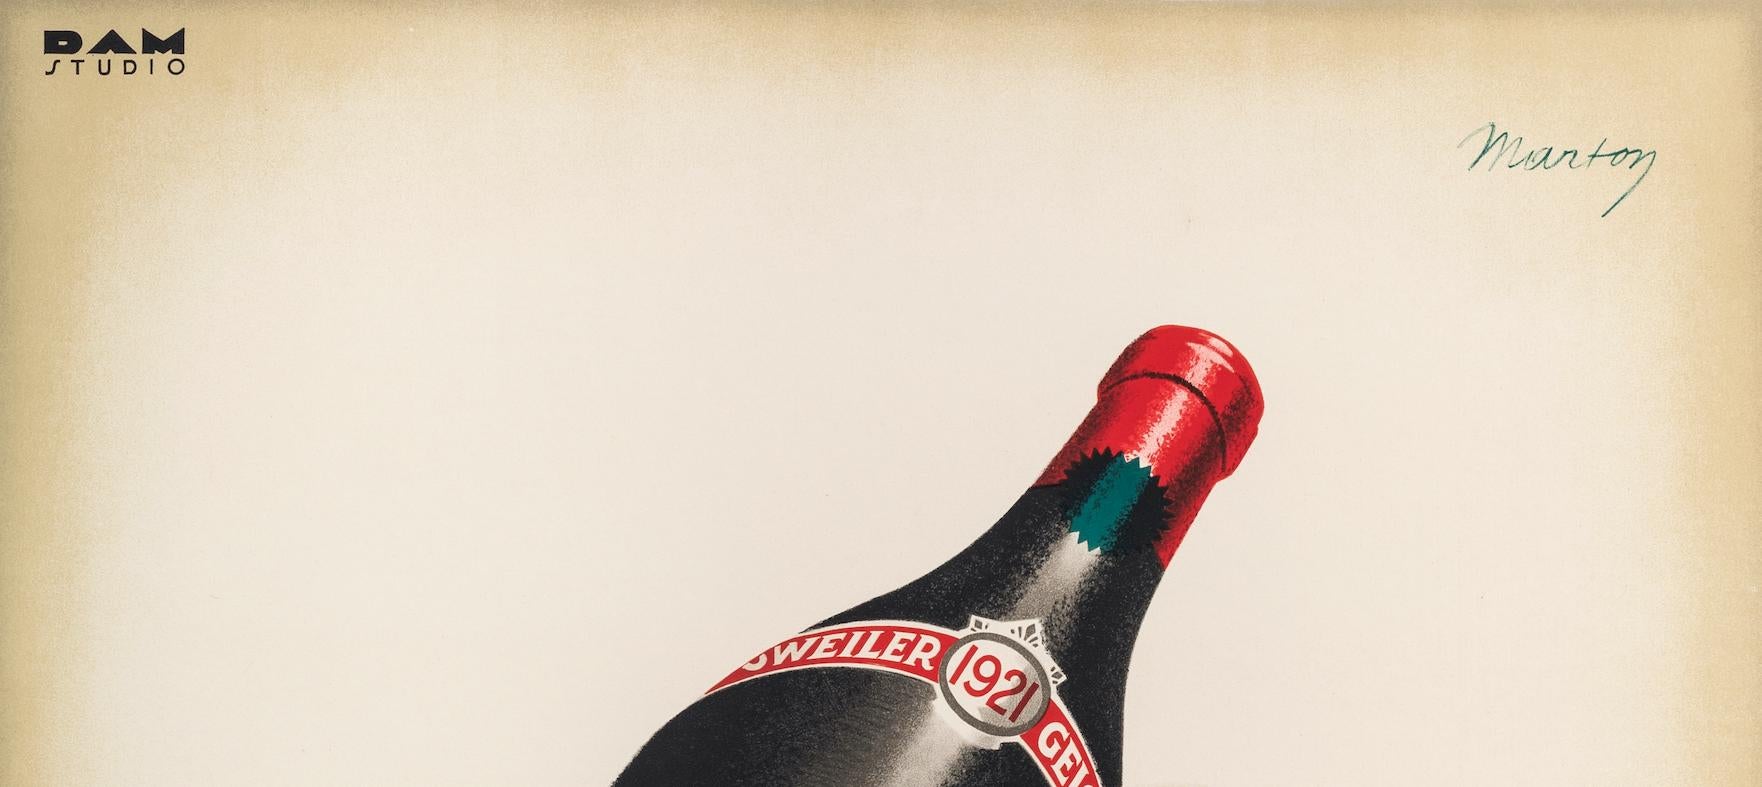 Art Deco Marton, Original Vintage Wine Poster, Geisweiler Burgundy Nuits St Georges, 1925 For Sale